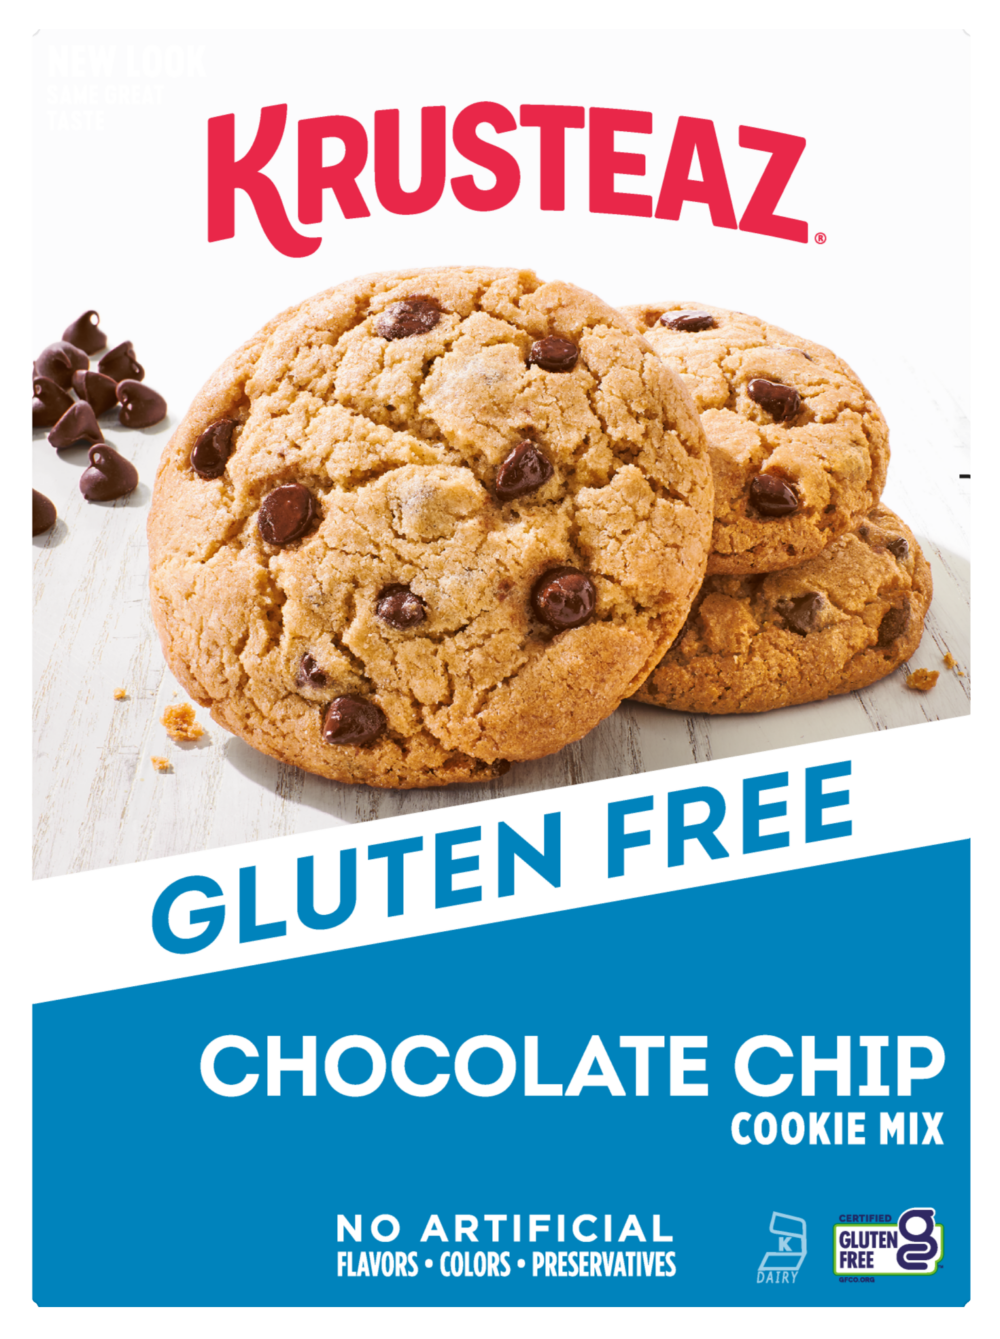 Box of Krusteaz Gluten Free Chocolate Chip Cookie Mix.